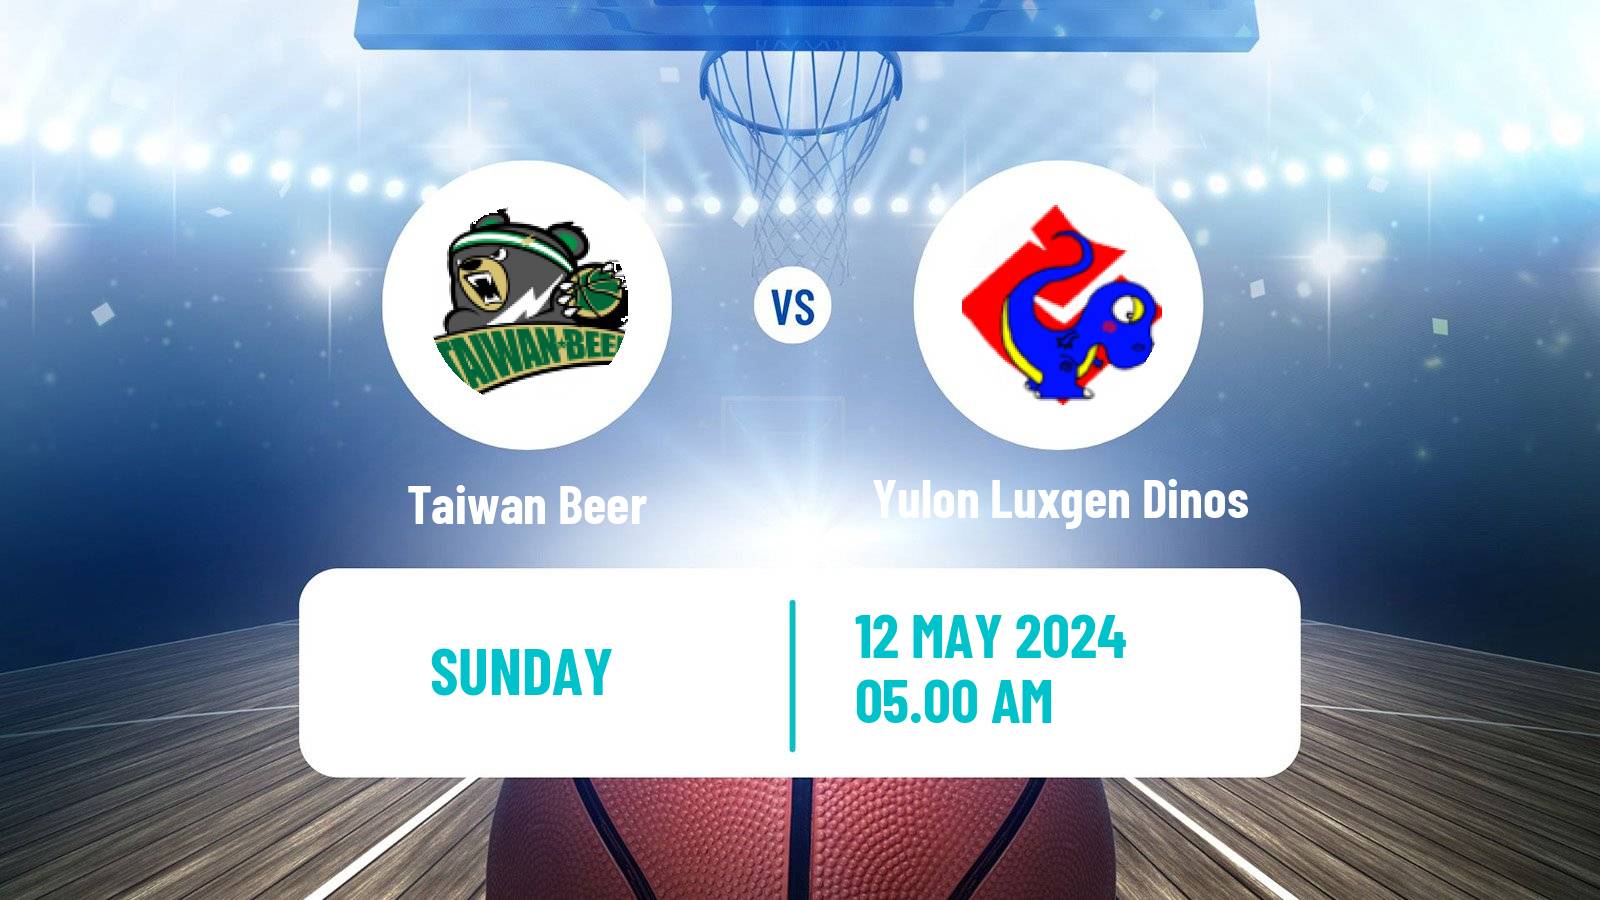 Basketball Taiwan SBL Taiwan Beer - Yulon Luxgen Dinos